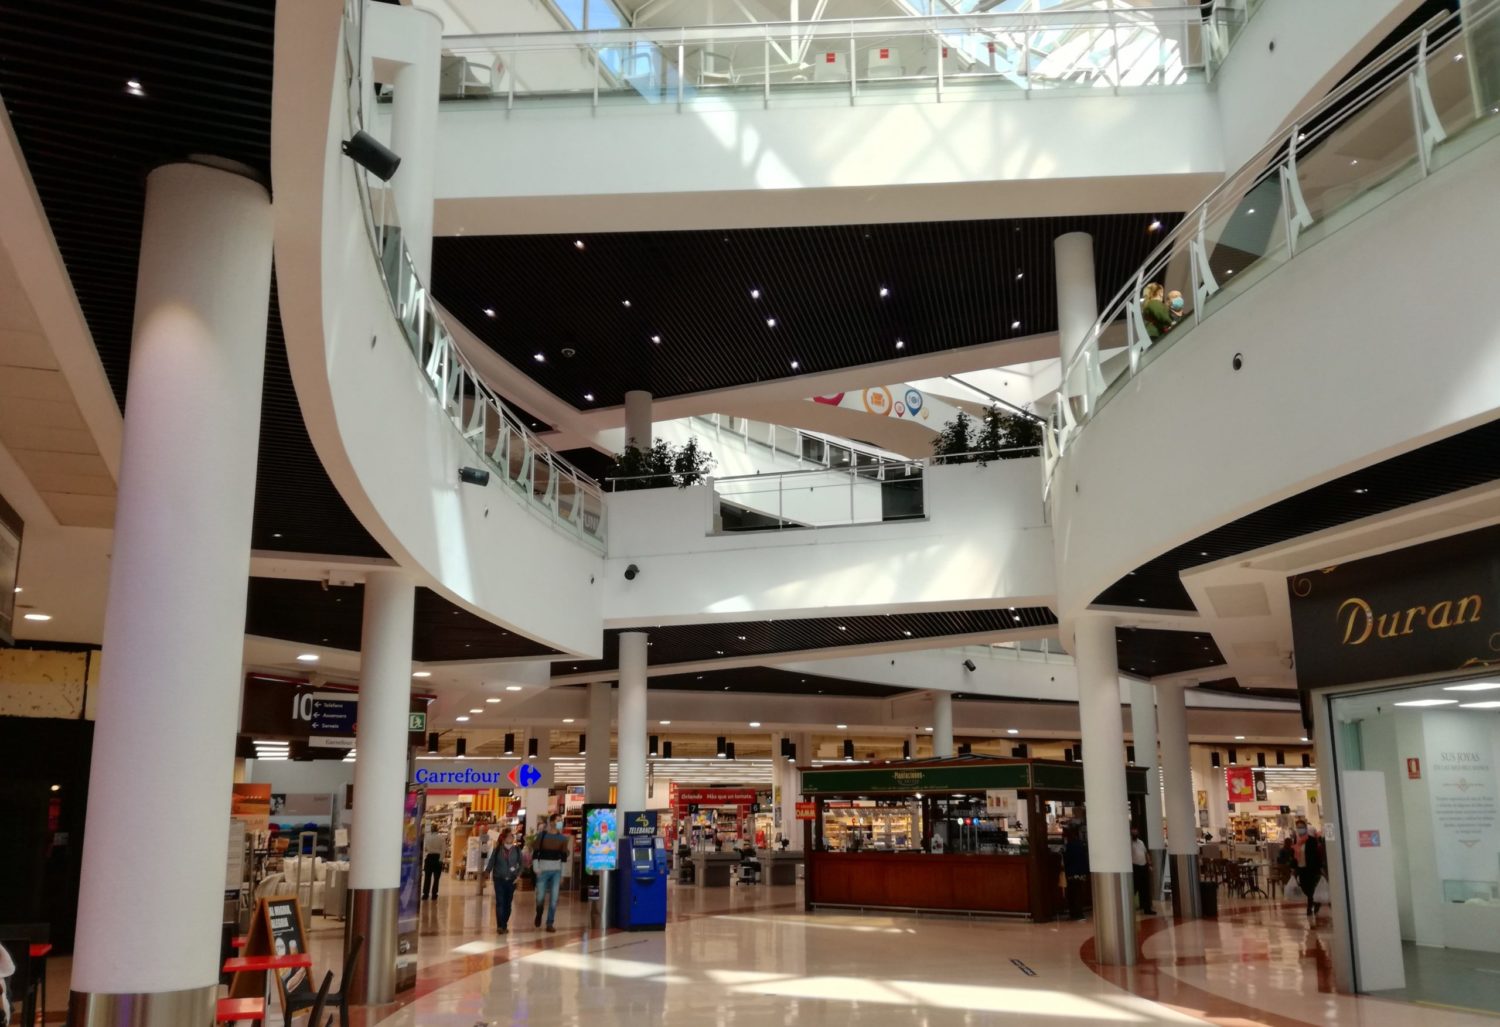 Gentalia asume la gestión de Llobregat Centre - Just Retail